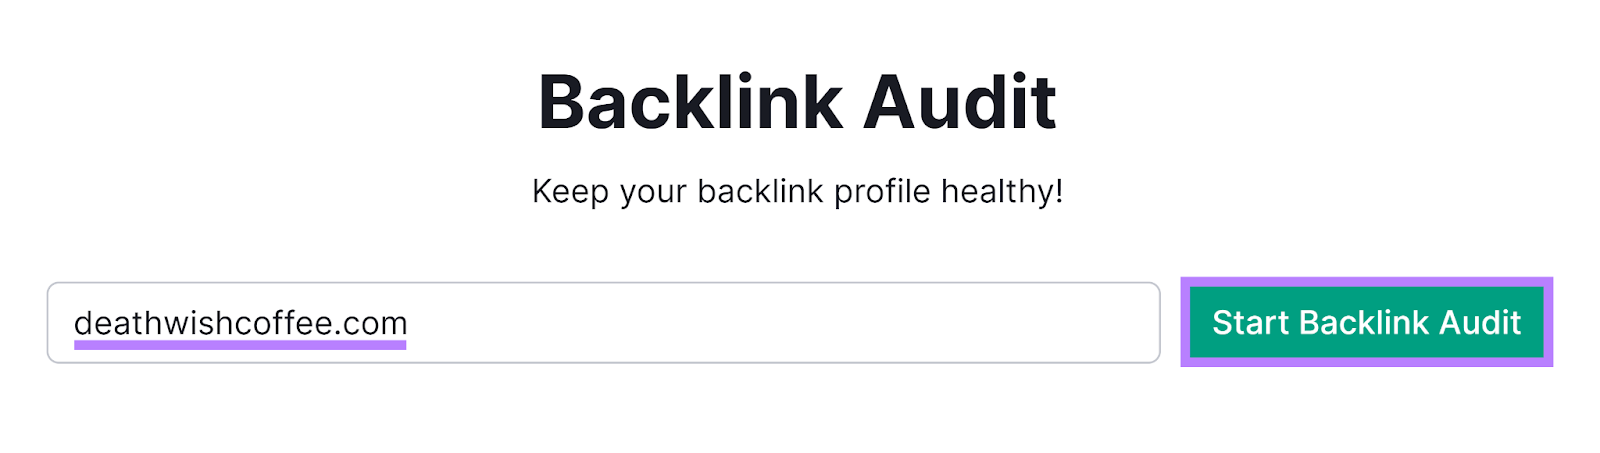 Backlink Audit start page with domain entered and Start Backlink Audit button highlighted.